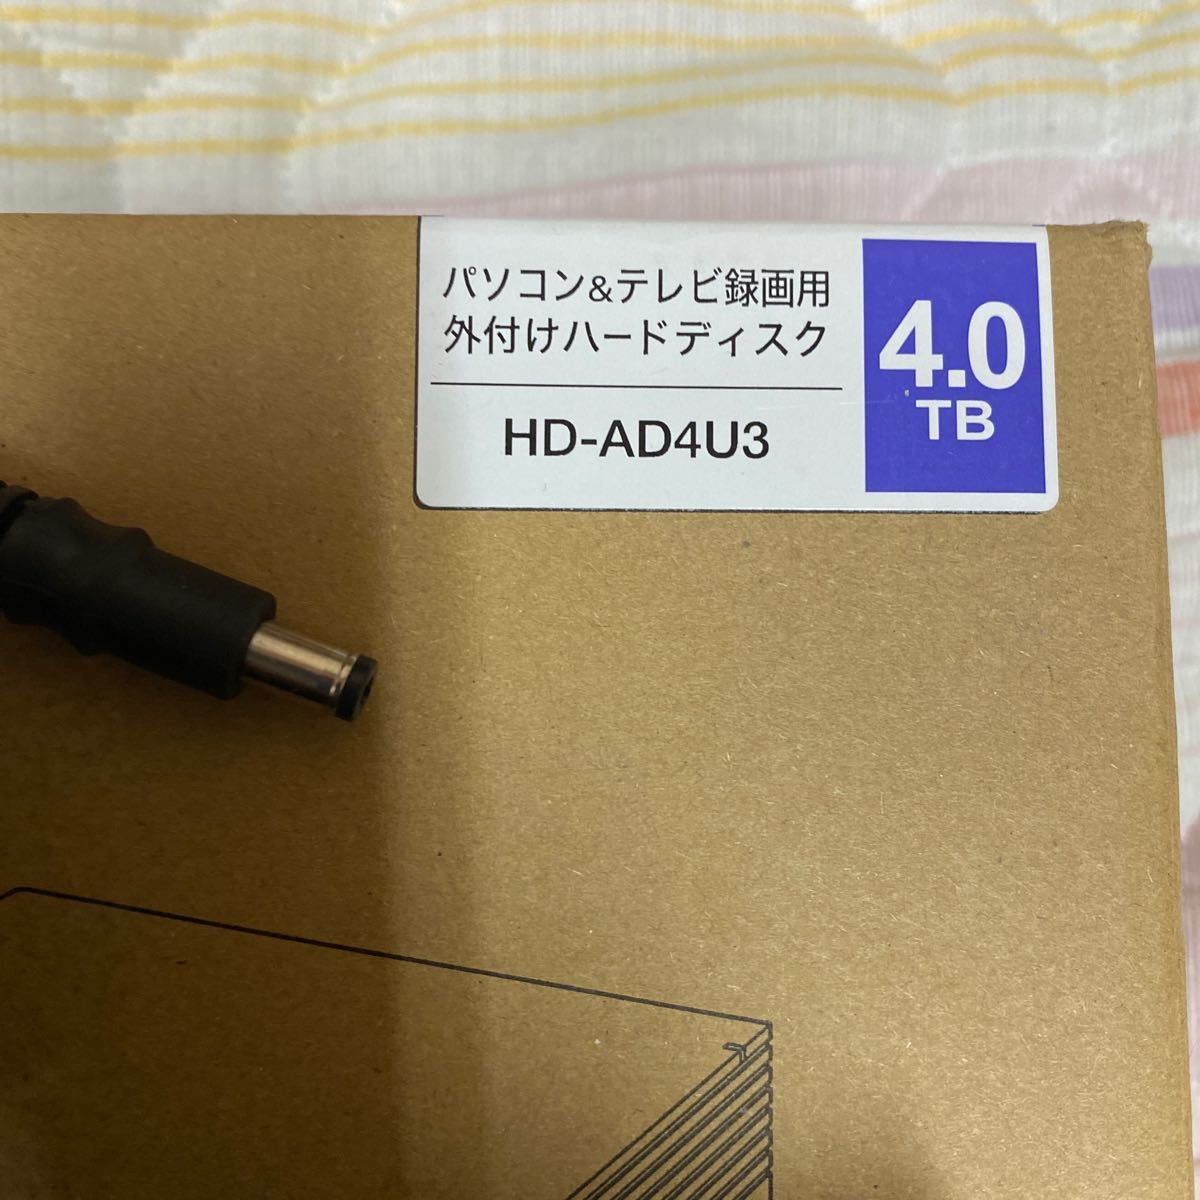 USB3.0 BUFFALO 4TB 外付けハードディスク HD-AD4U3